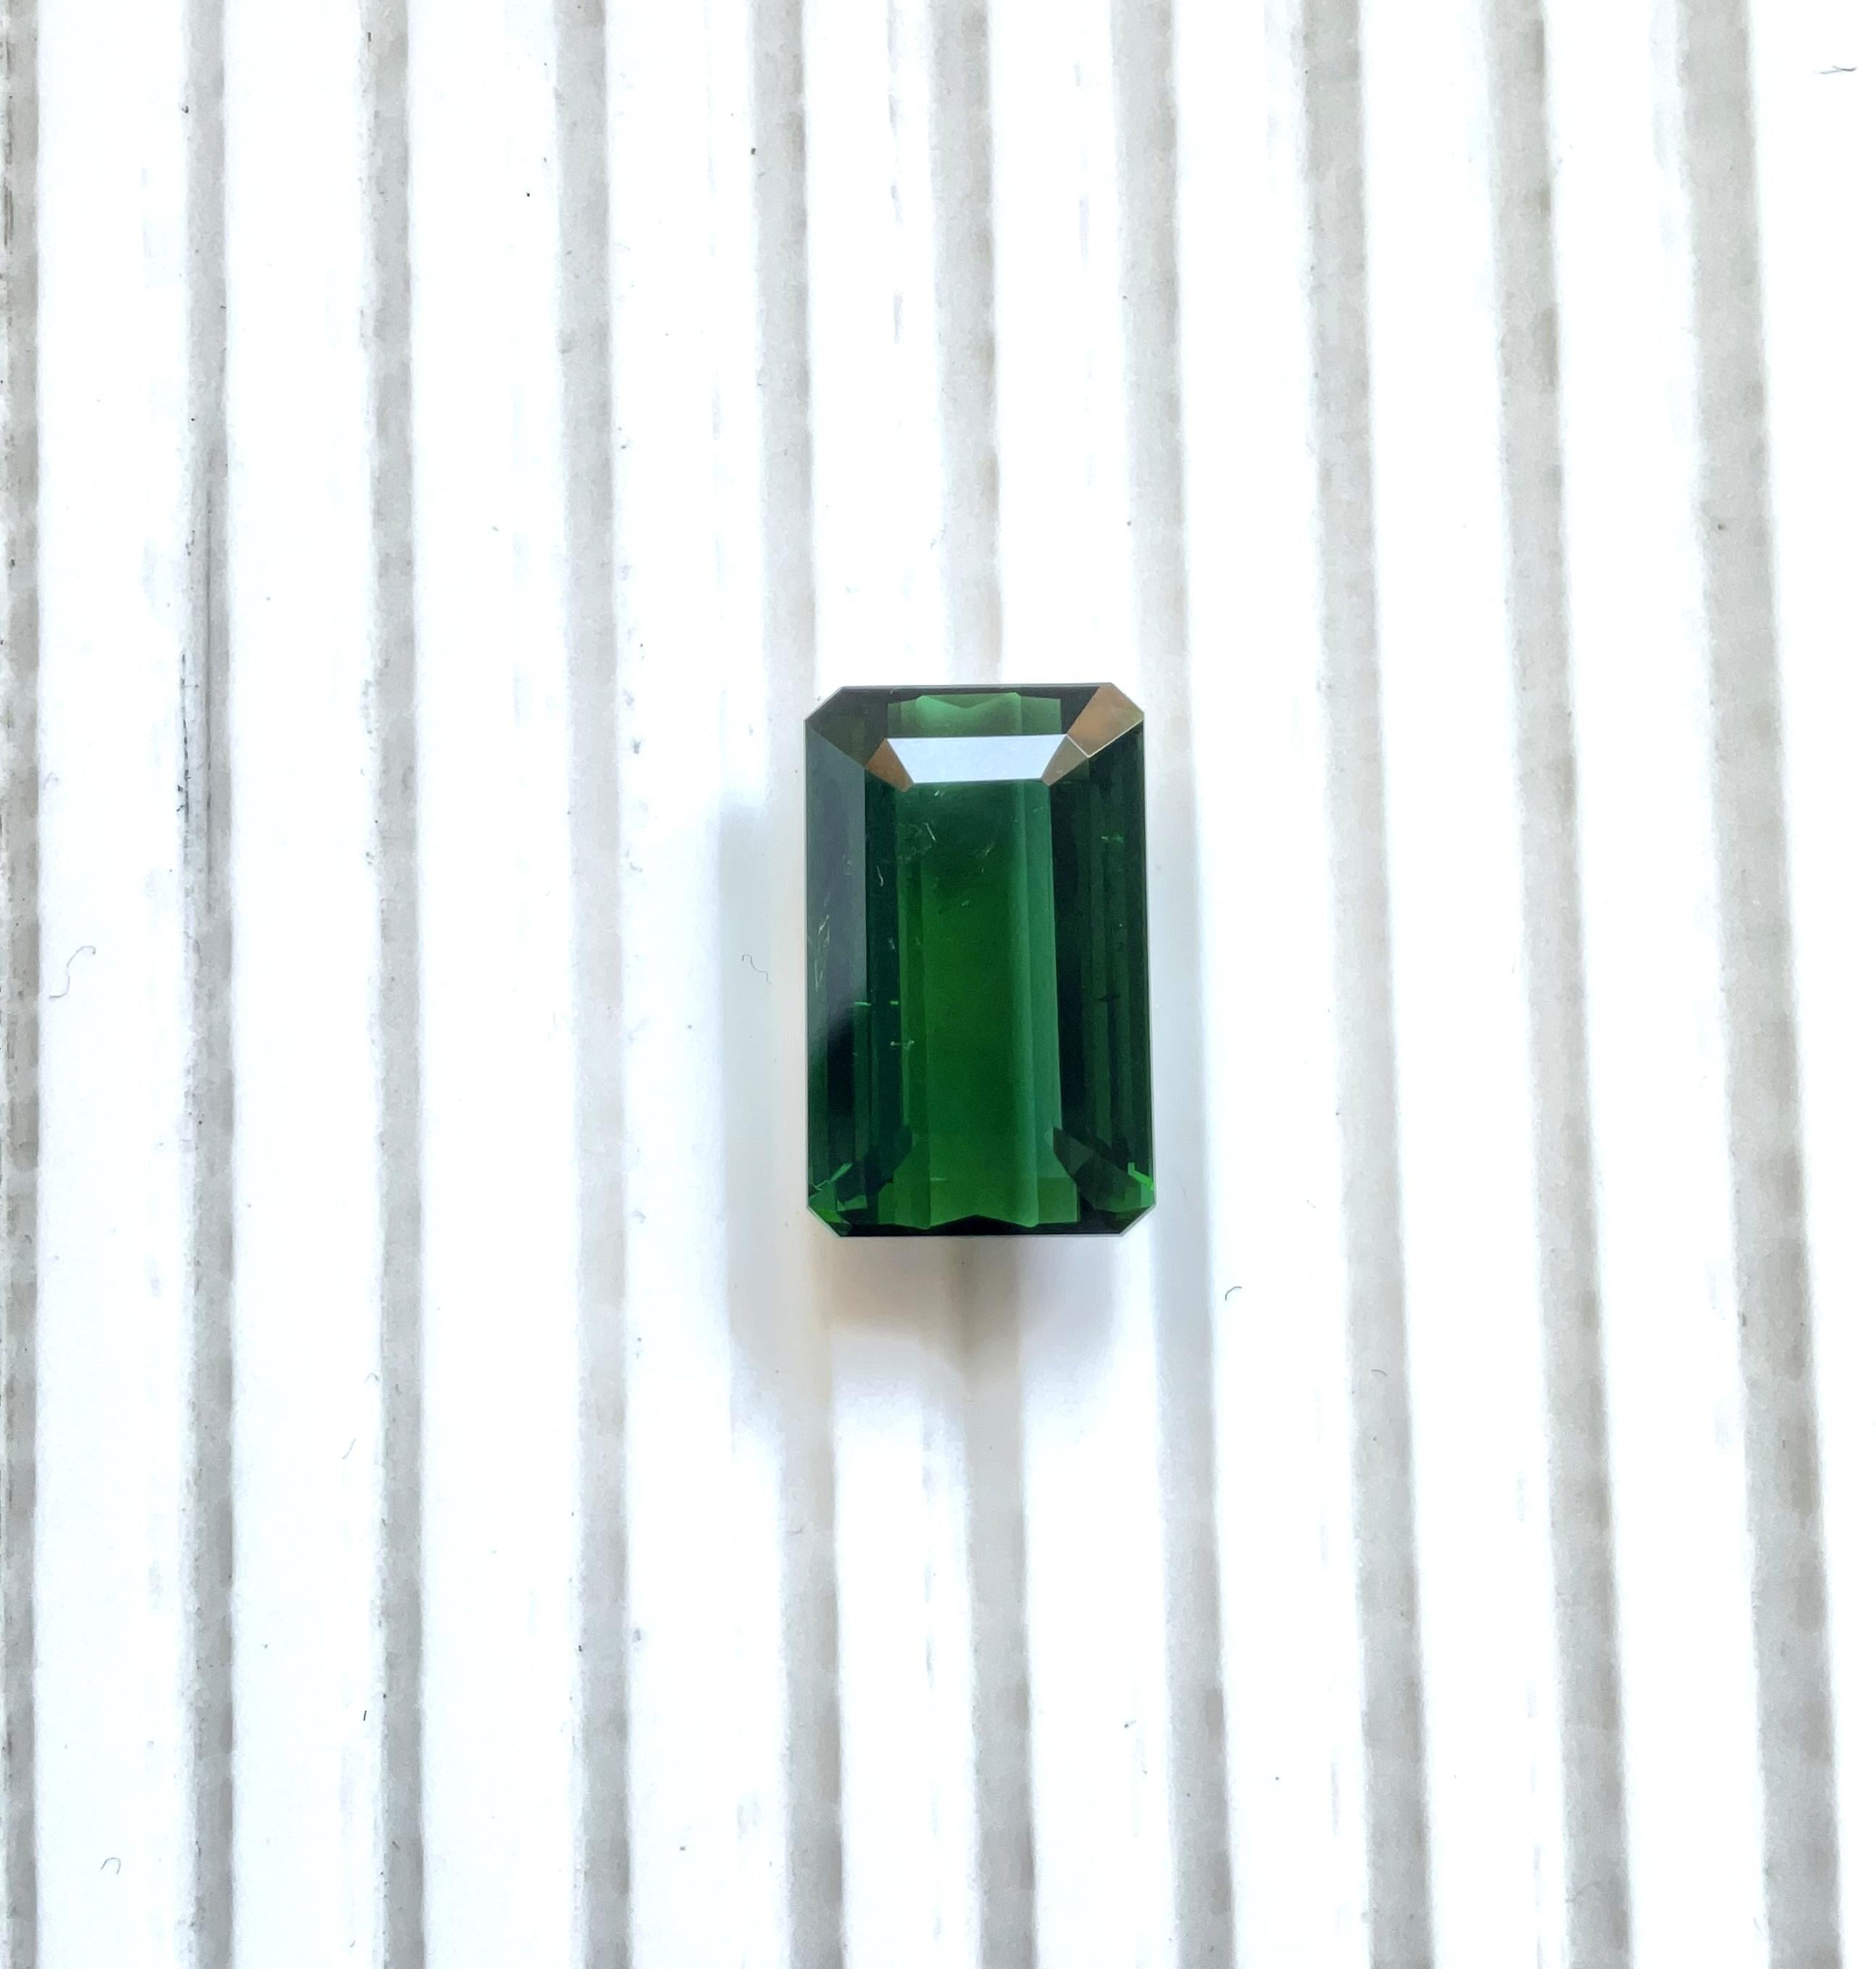 14.46 carats Nigeria green tourmaline Top Quality Octagon Cut stone natural Gem

Gemstone - Tourmaline
Weight- 14.46 Carats
Shape - Octagon
Size - 18x11x7 MM
Pieces - 1